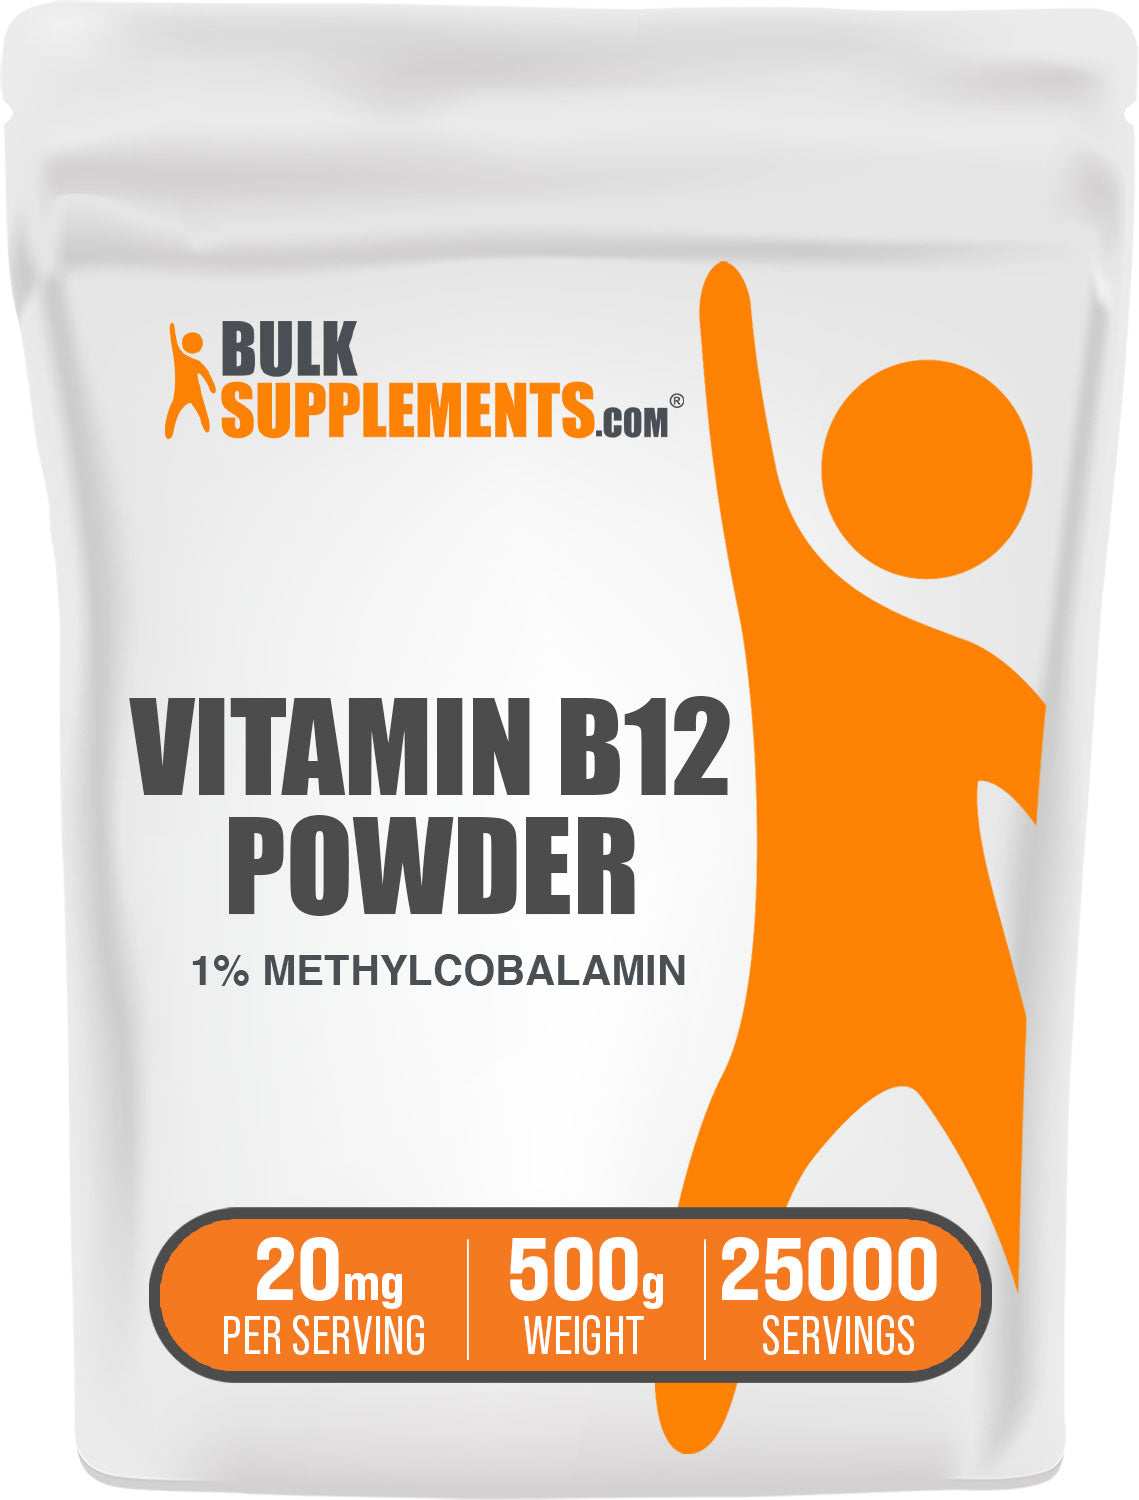 BulkSupplements Vitamin B12 Powder 1% Methylcobalamin 500g bag